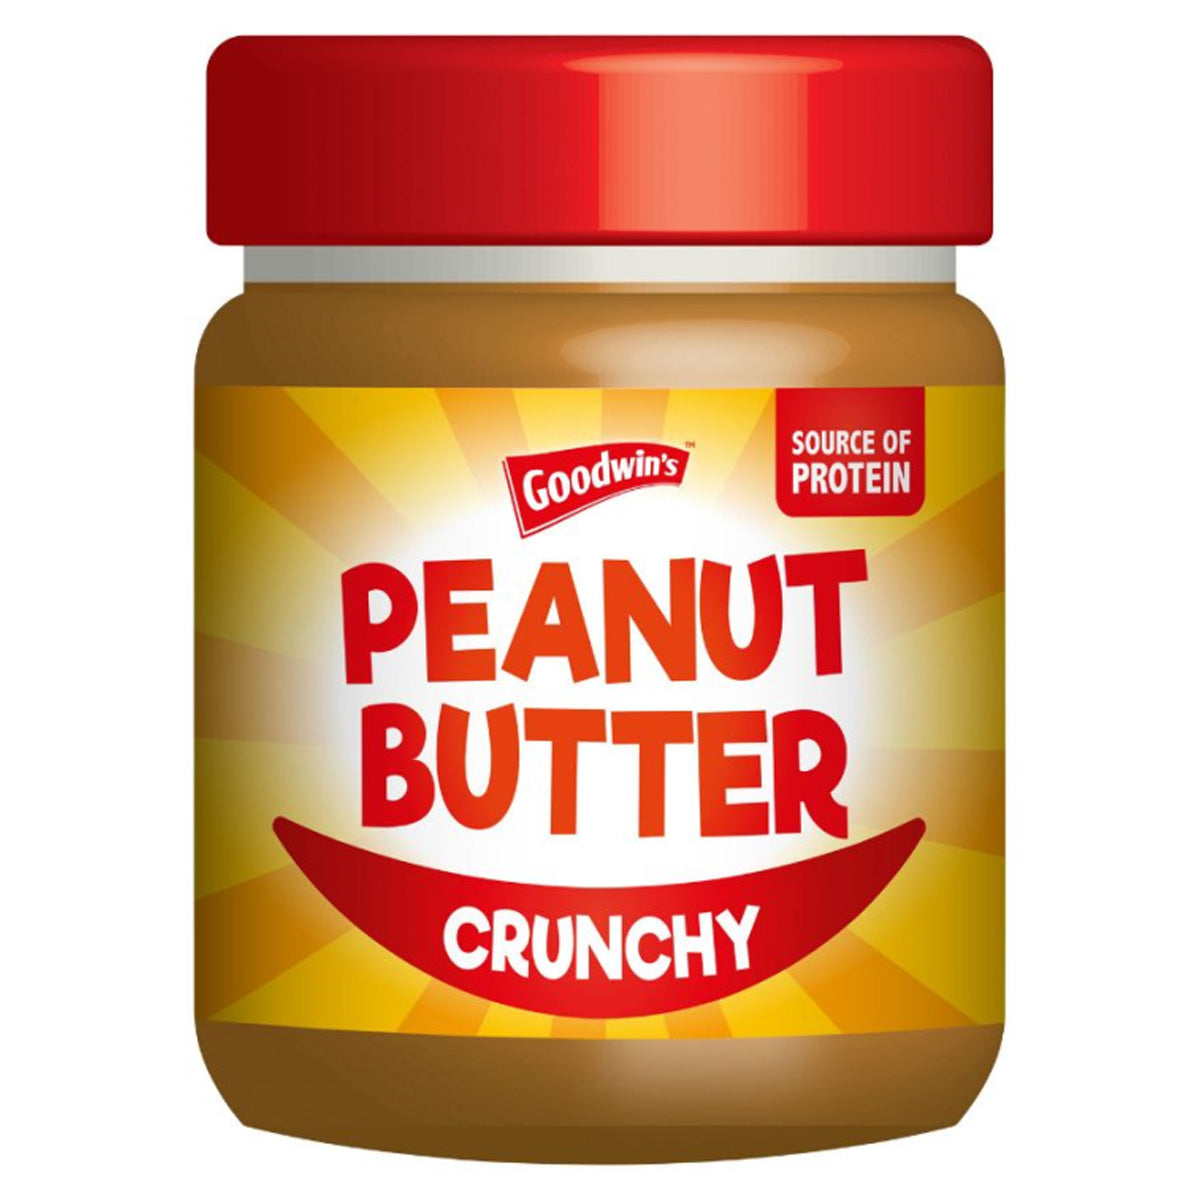 A Goodwins - Crunchy Peanut Butter - 340g on a white background.